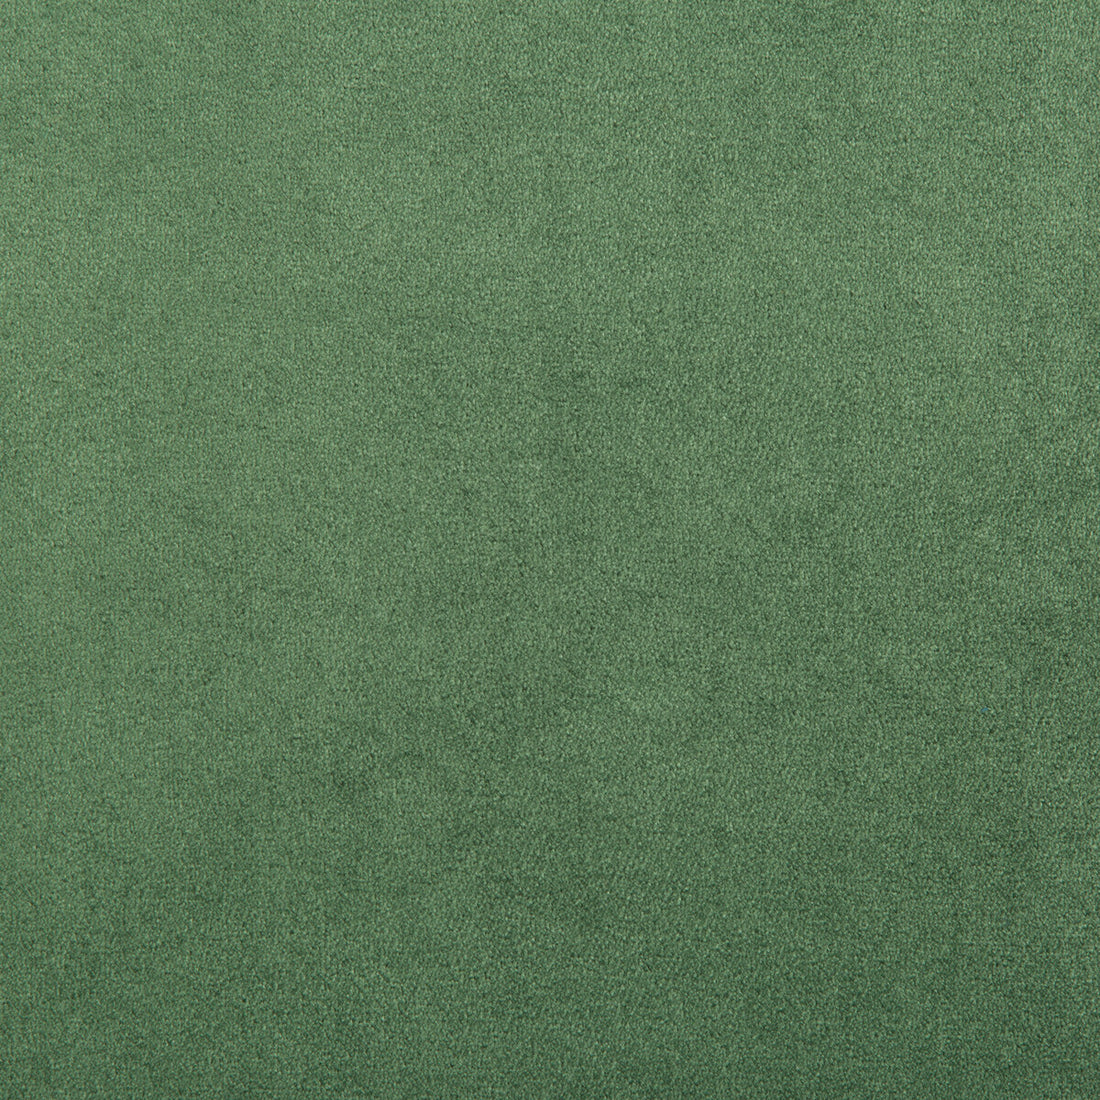 Madison Velvet fabric in bottle green color - pattern 35402.30.0 - by Kravet Contract